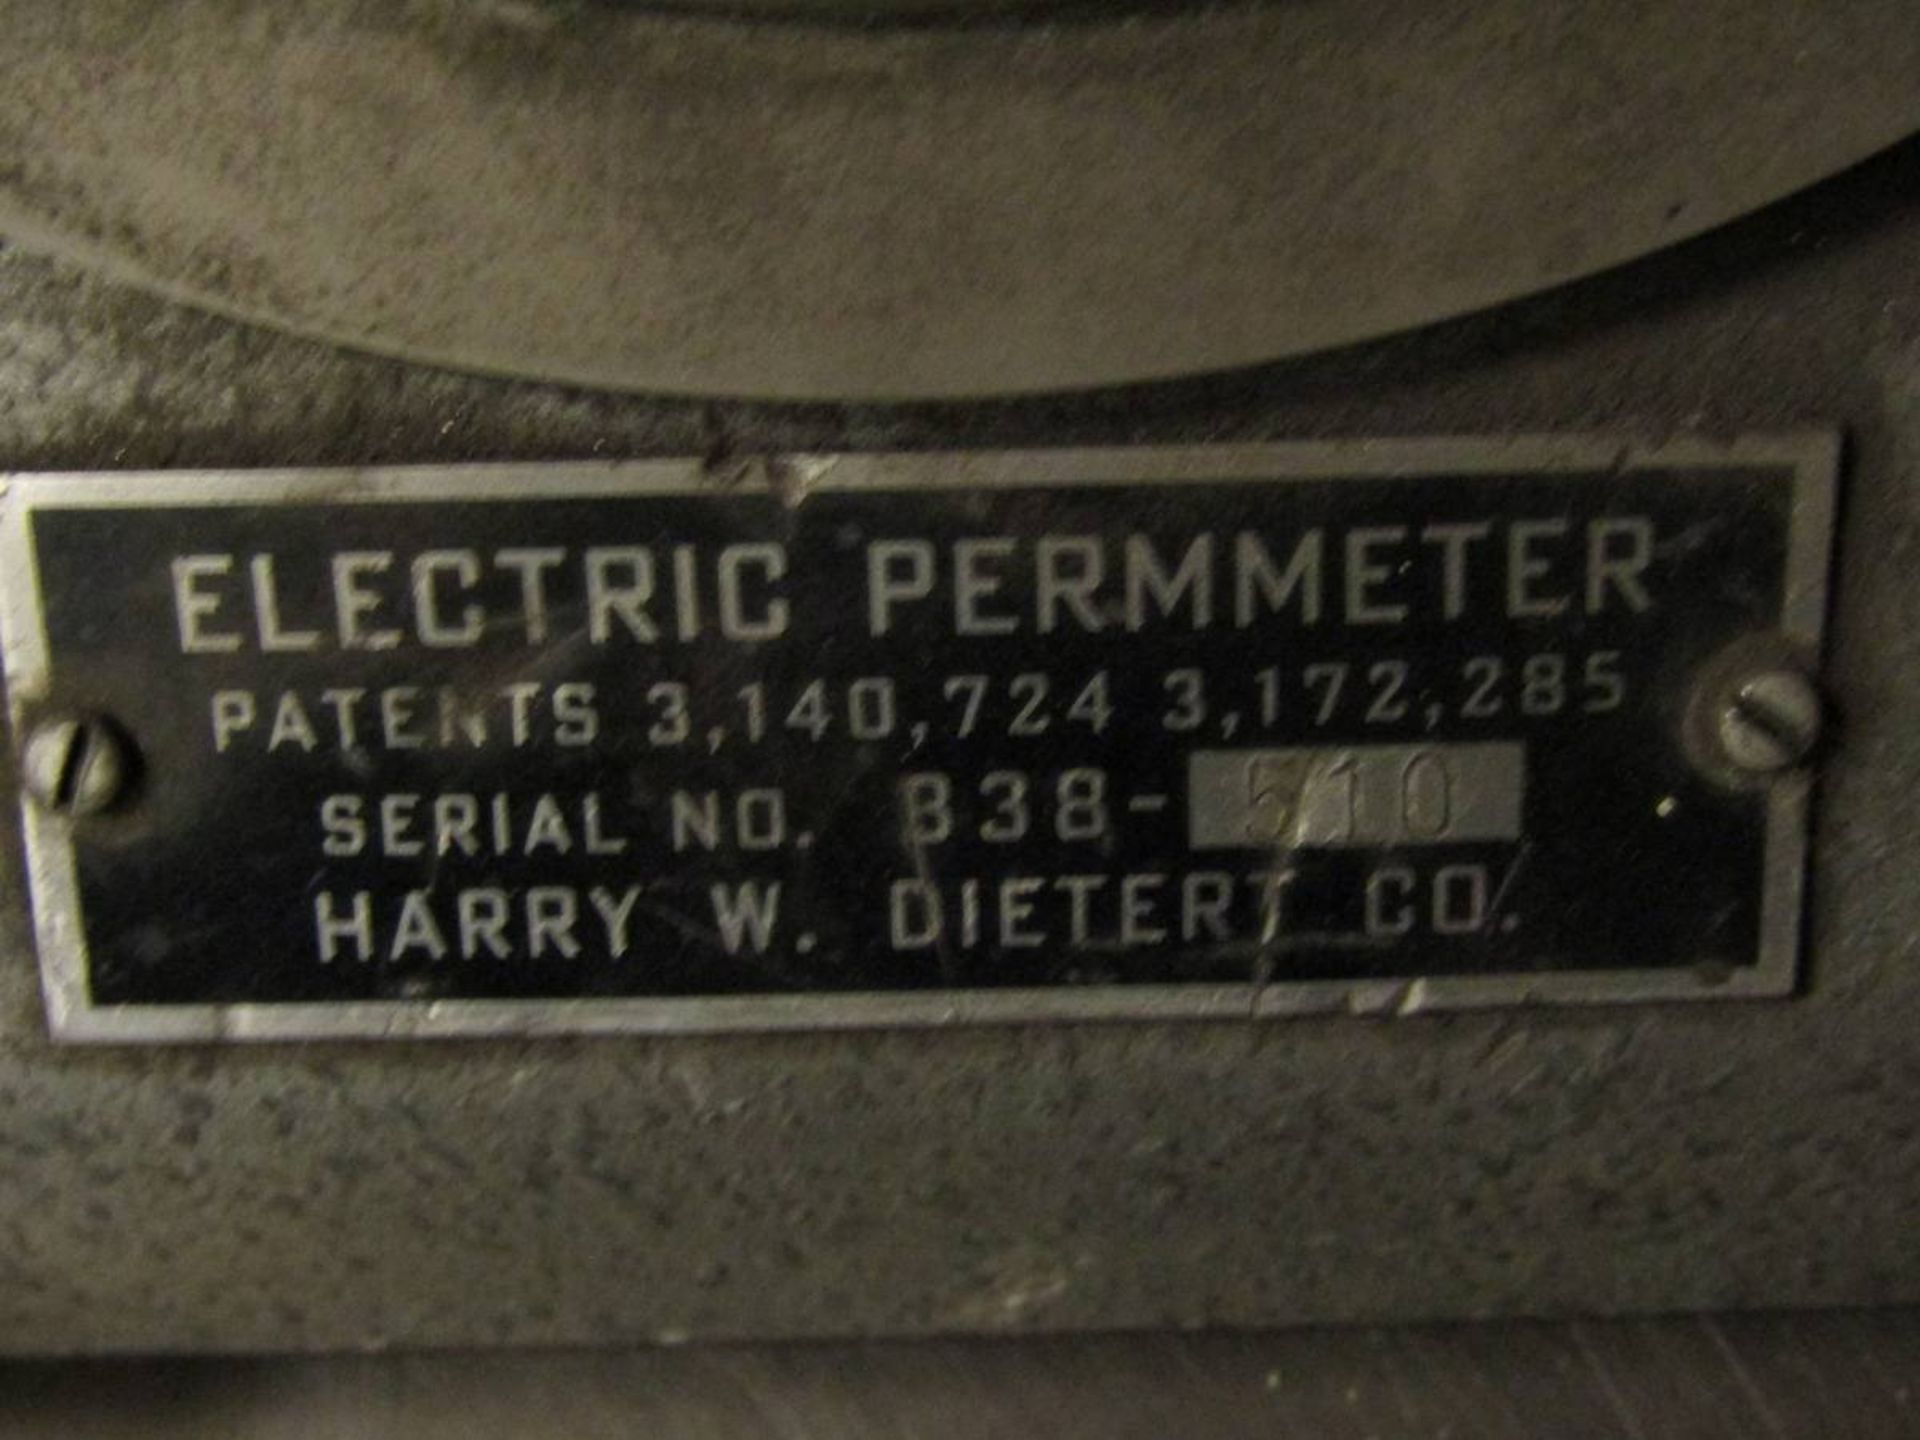 Diertert Electric Permmeter - Image 2 of 2